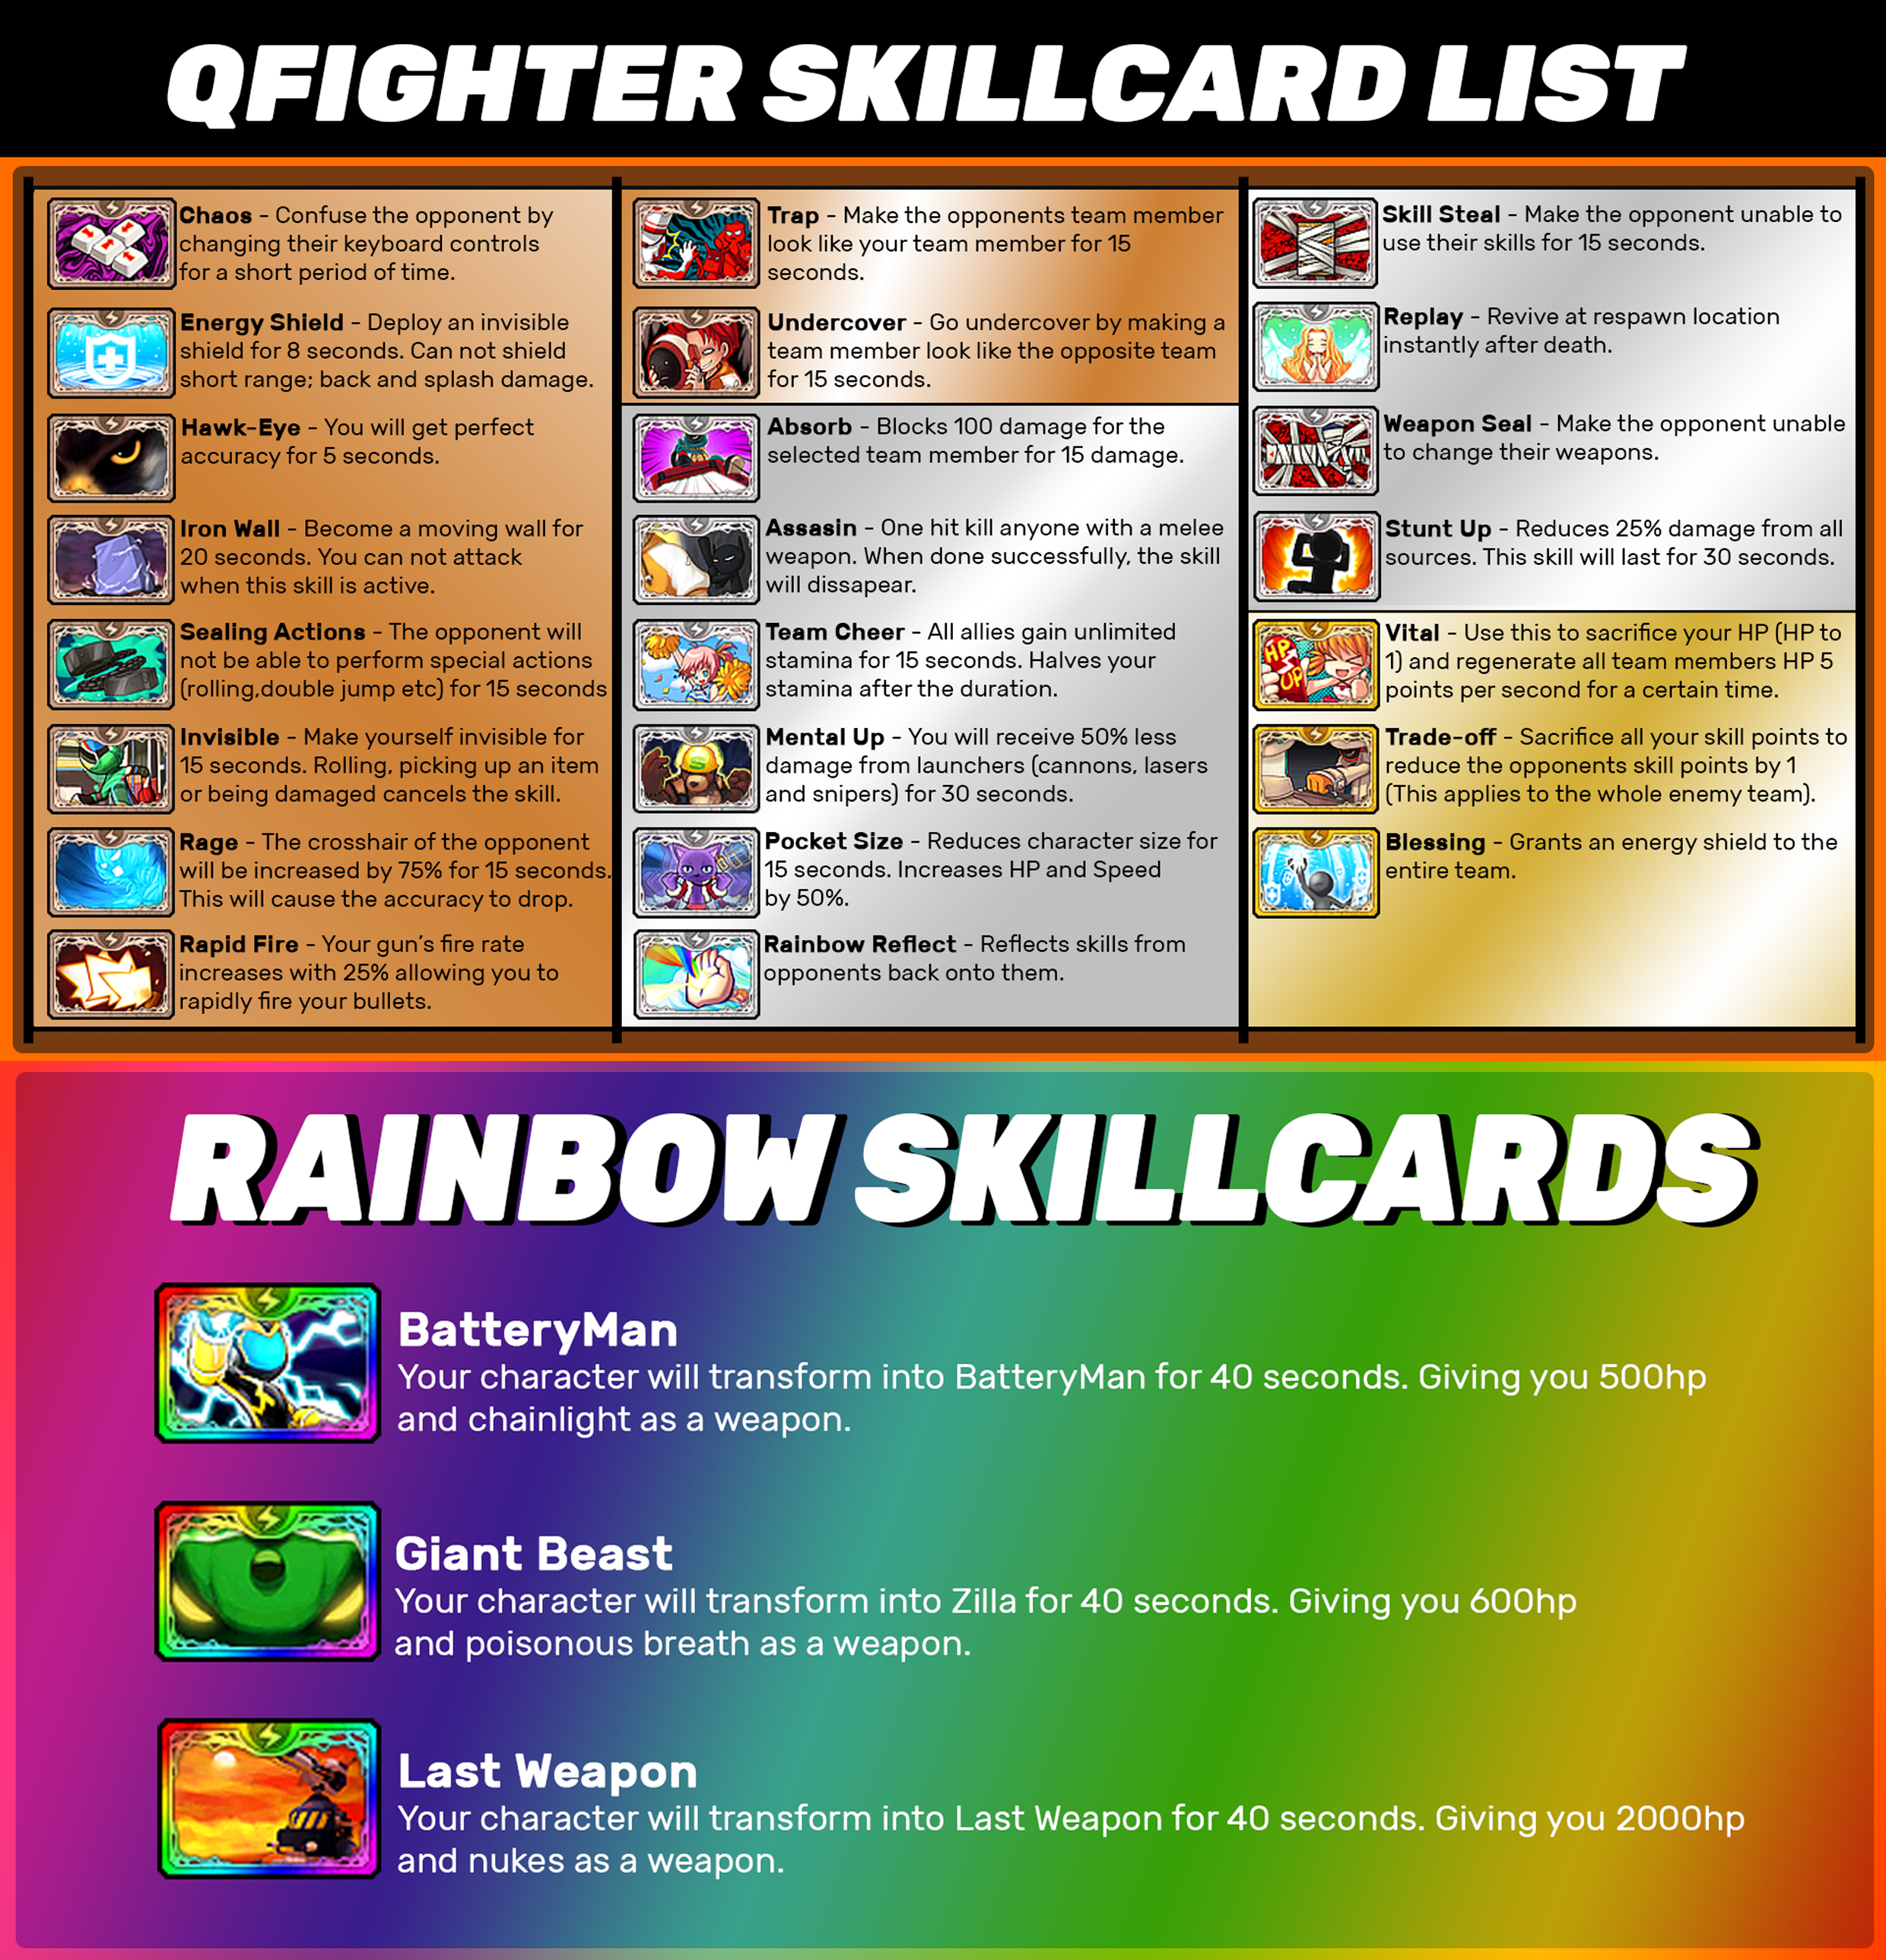 qfighter-skillcards-list